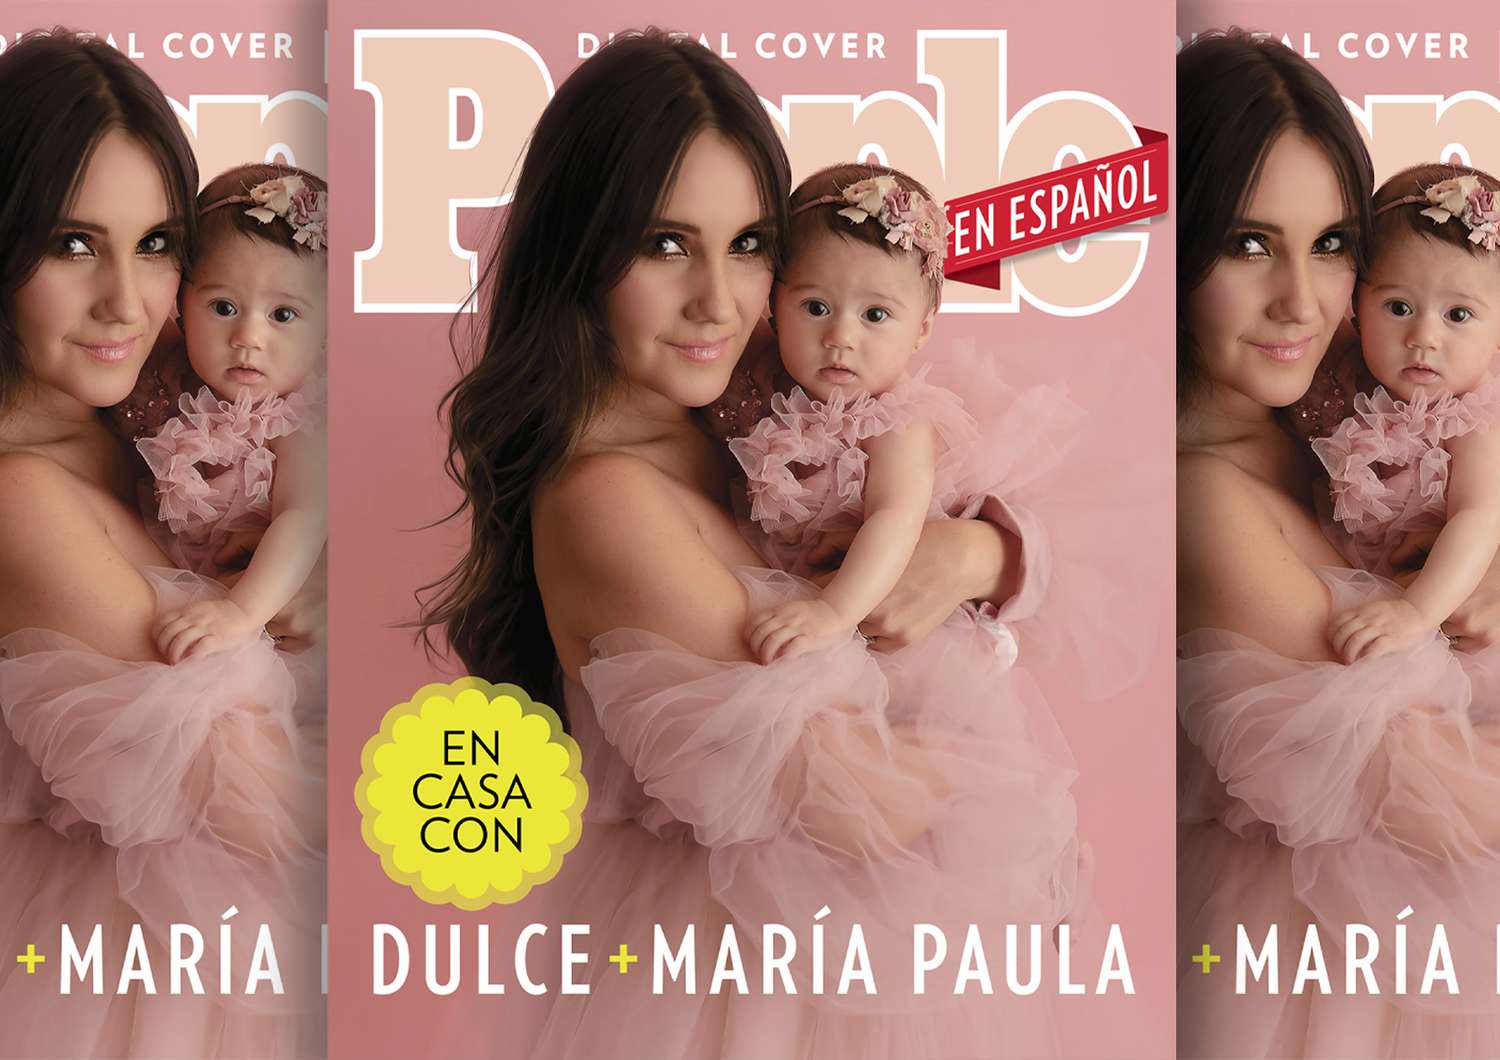 Dulce Maria y Maria Paula - Digital Cover - DO NOT REUSE